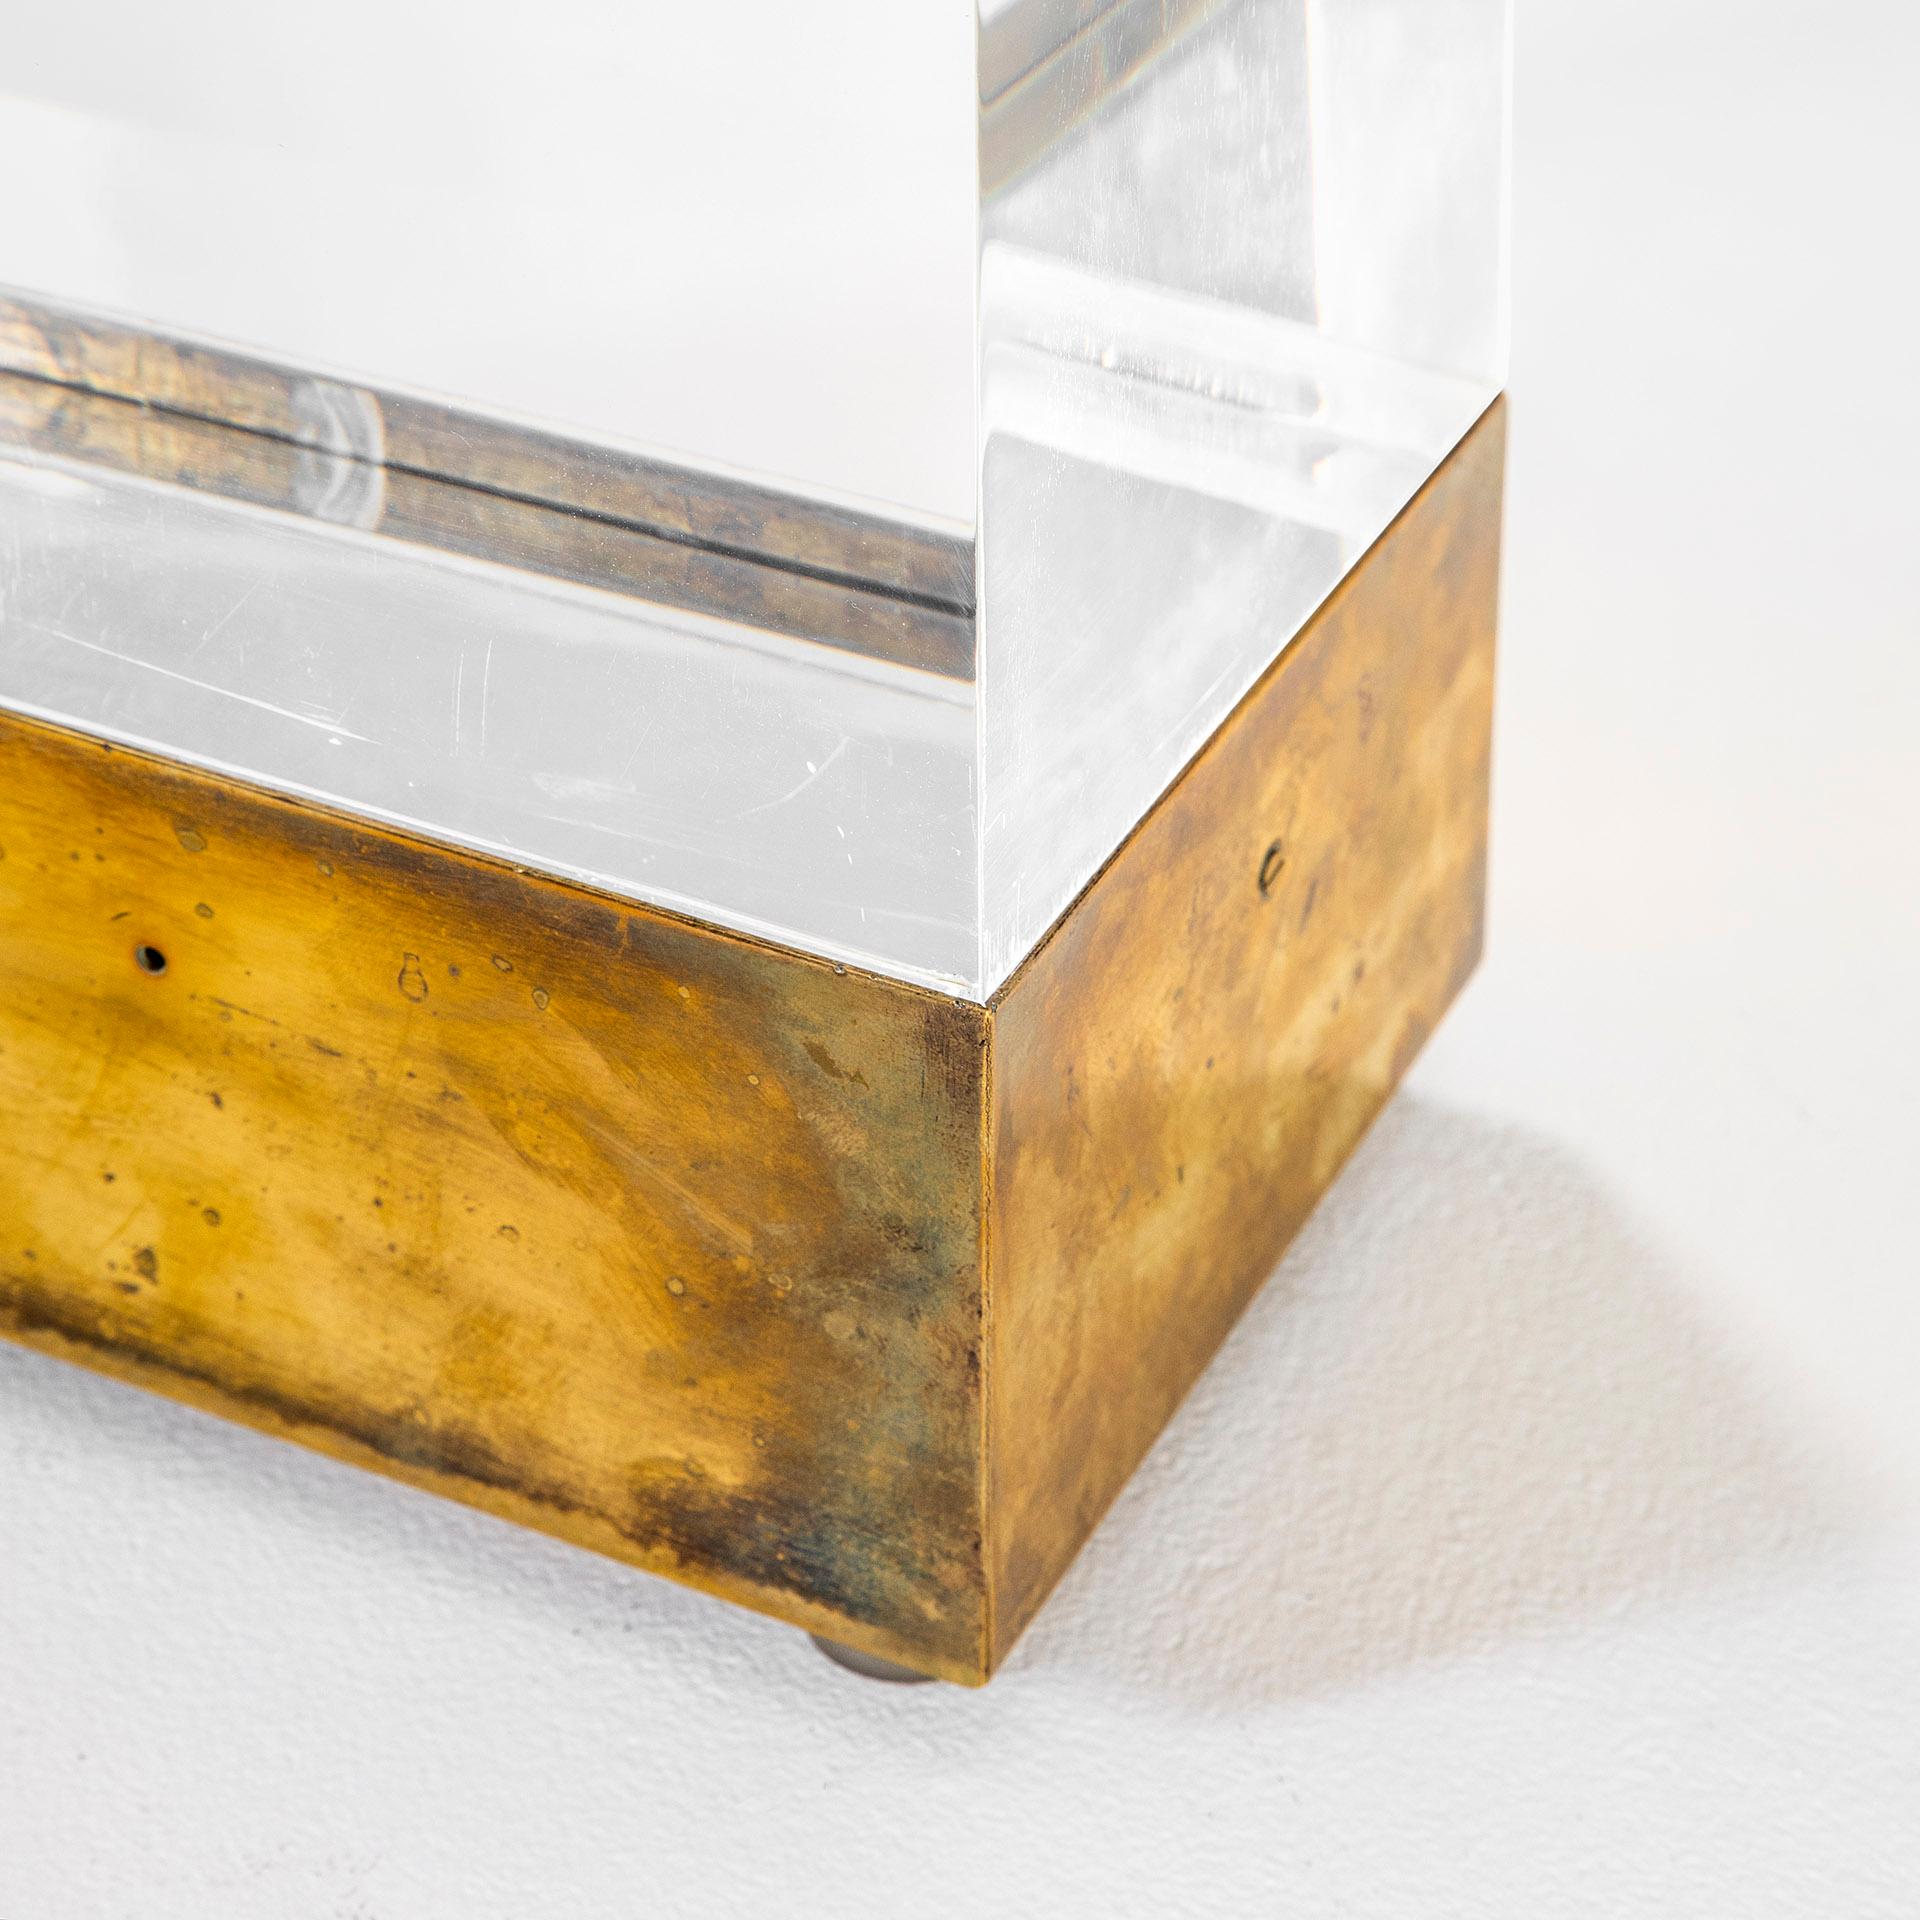 20th Century Gabriella Crespi Table Lamp in Brass and Plexiglass, '70s For Sale 1